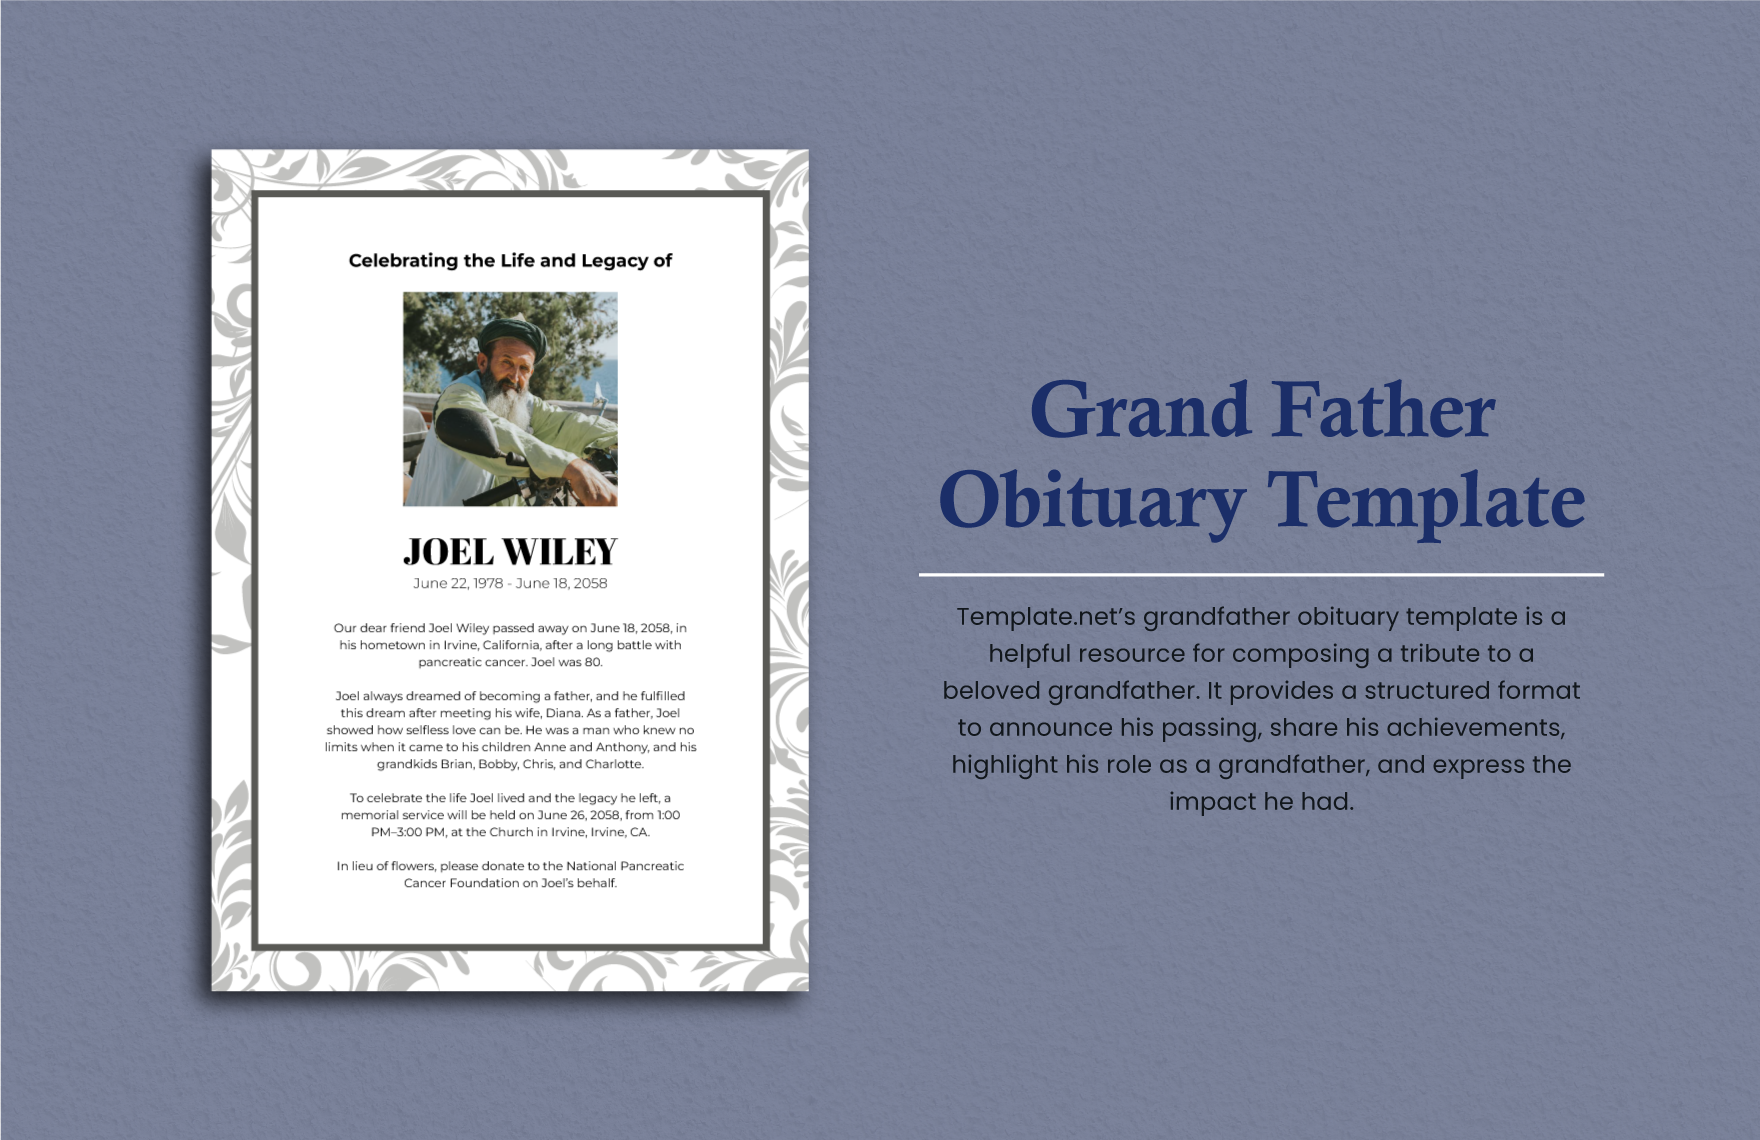 Grand Father Obituary Template